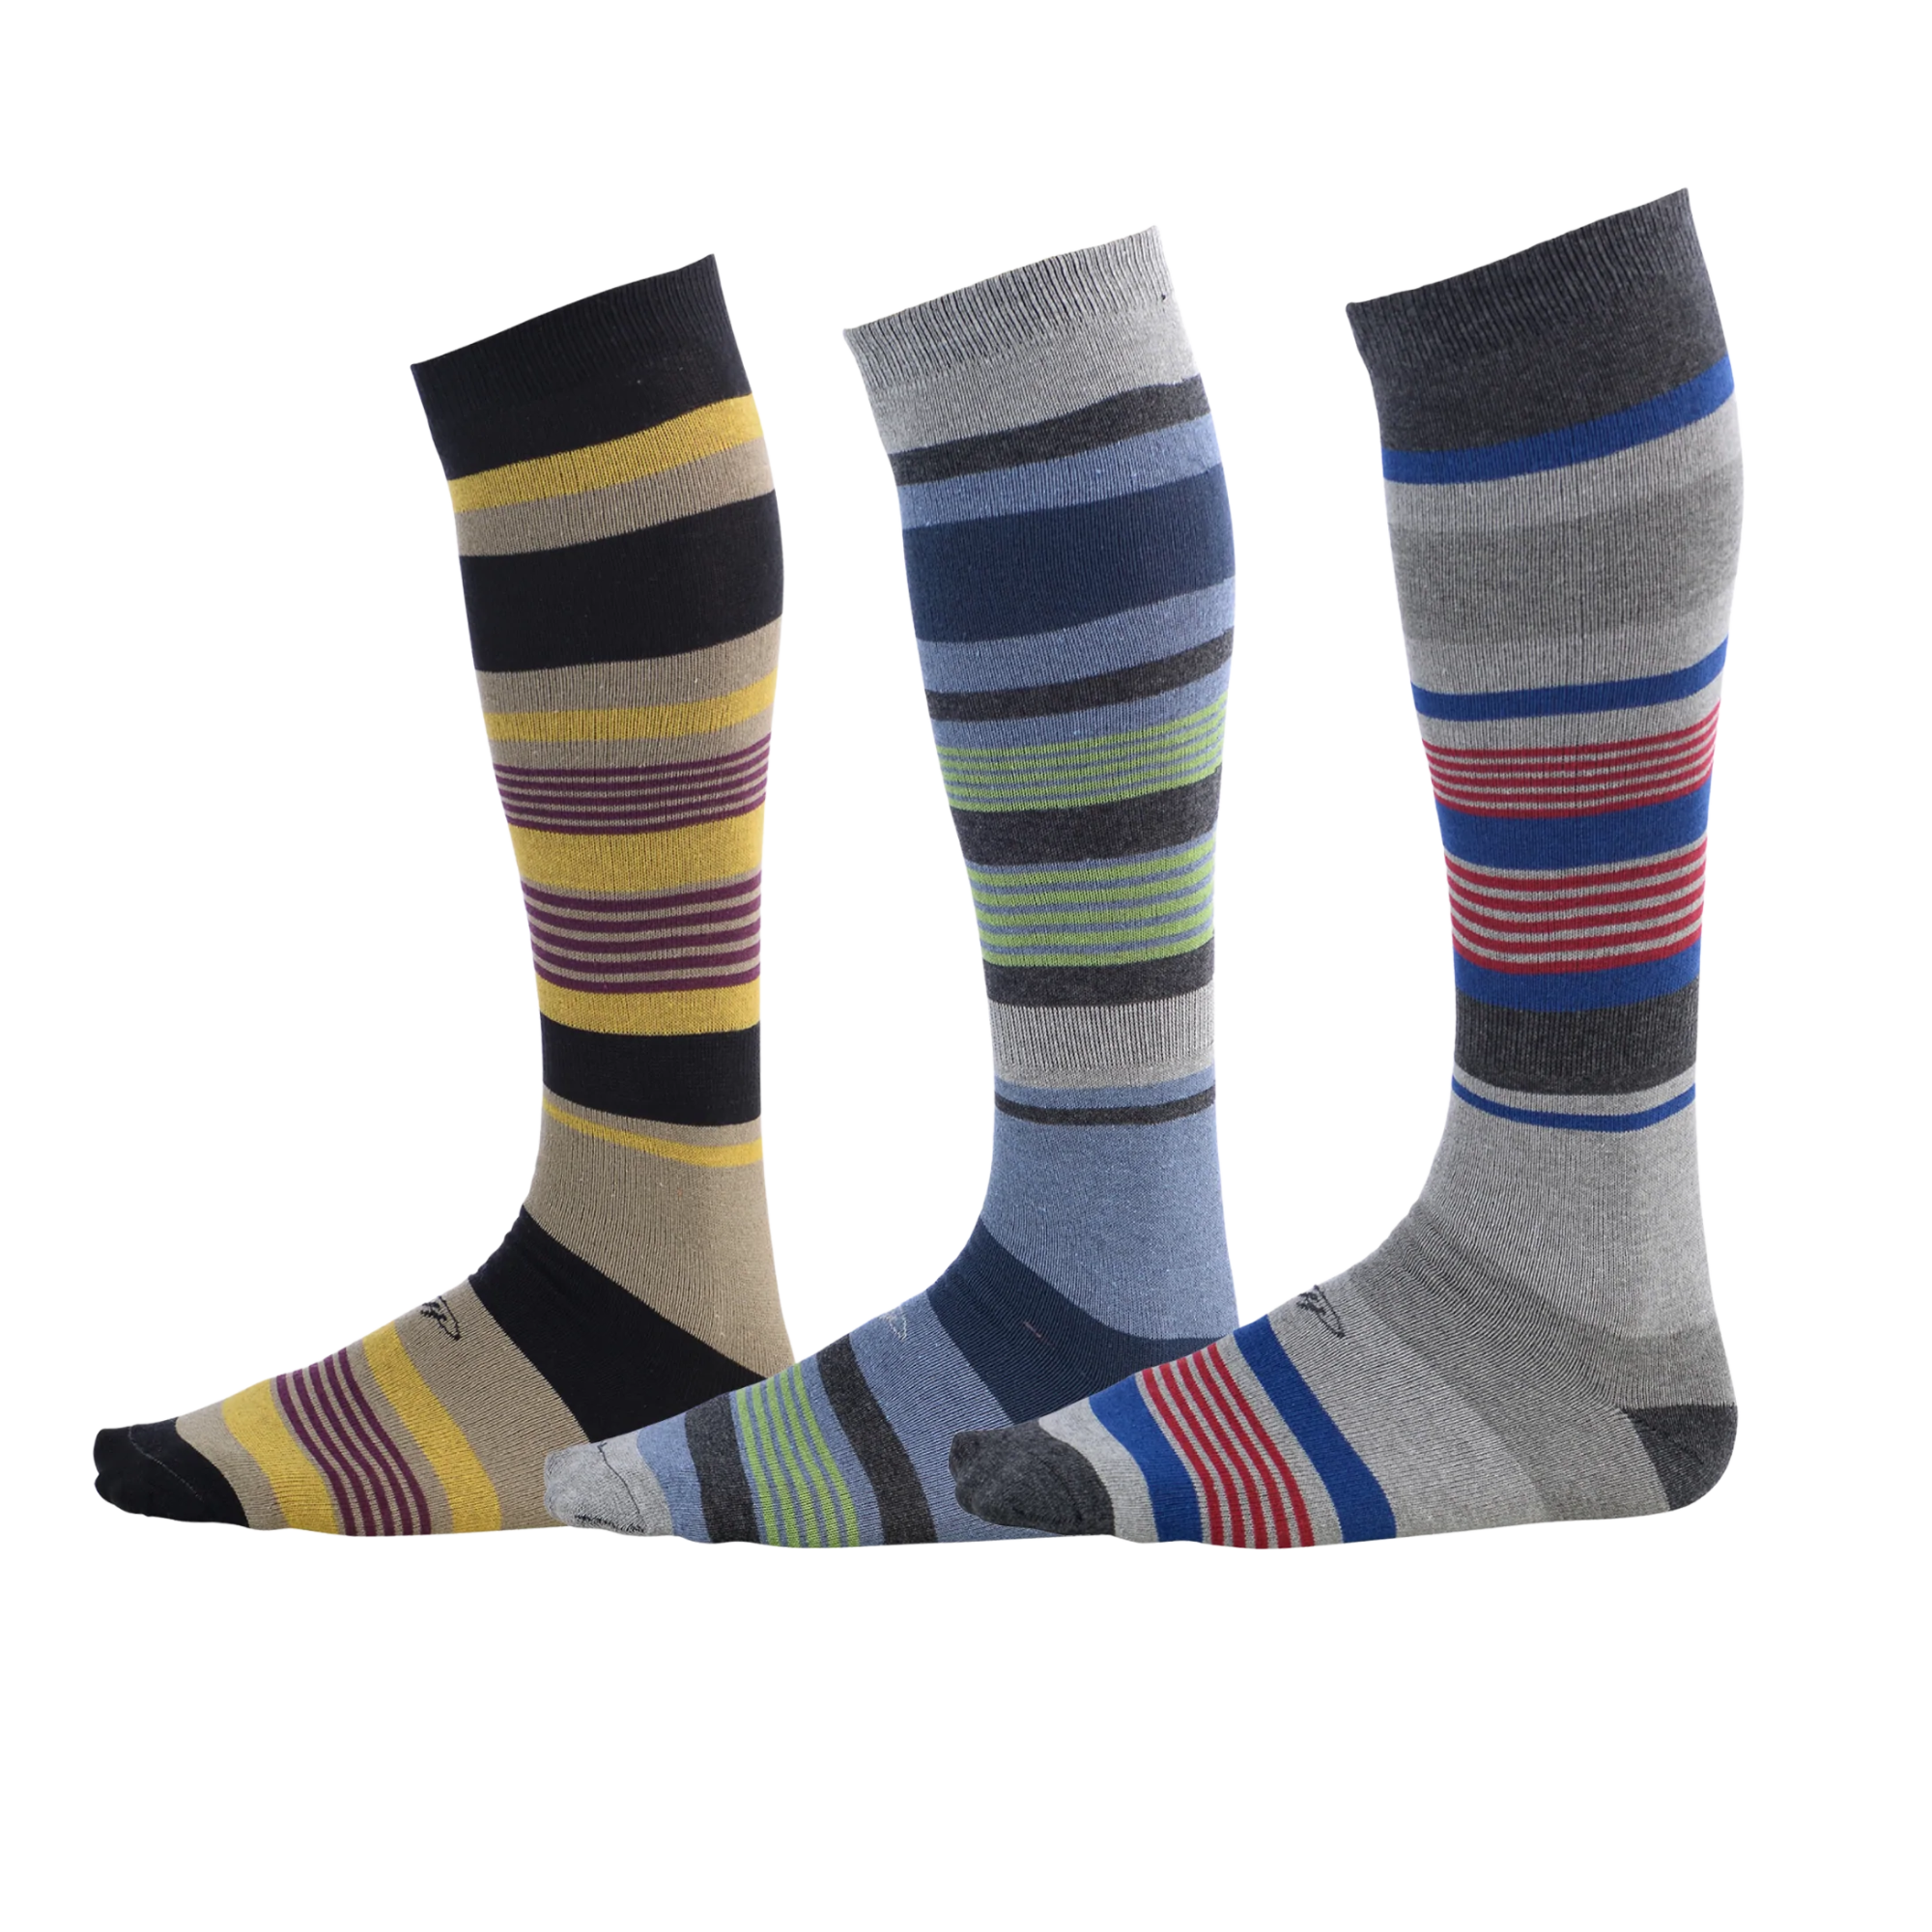 beige dress socks with colored stripes, blue dress socks with colored stripes, light grey dress socks with colored stripes